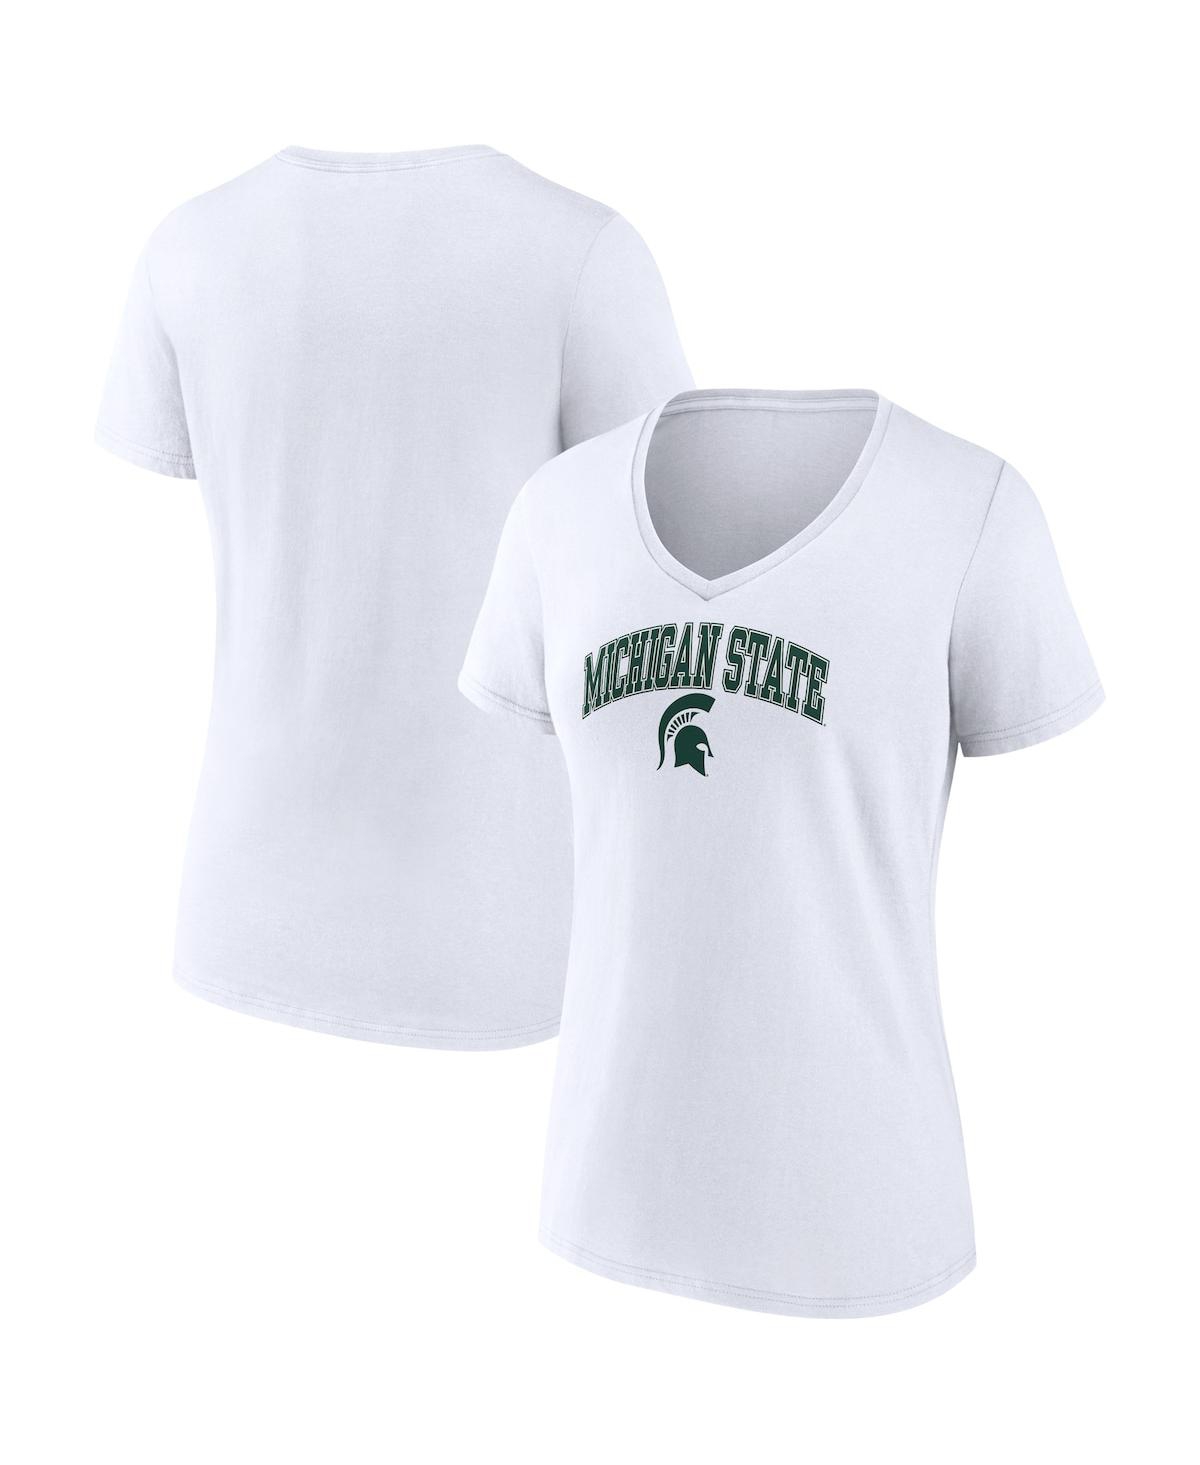 Fanatics Women's  White Michigan State Spartans Evergreen Campus V-neck T-shirt